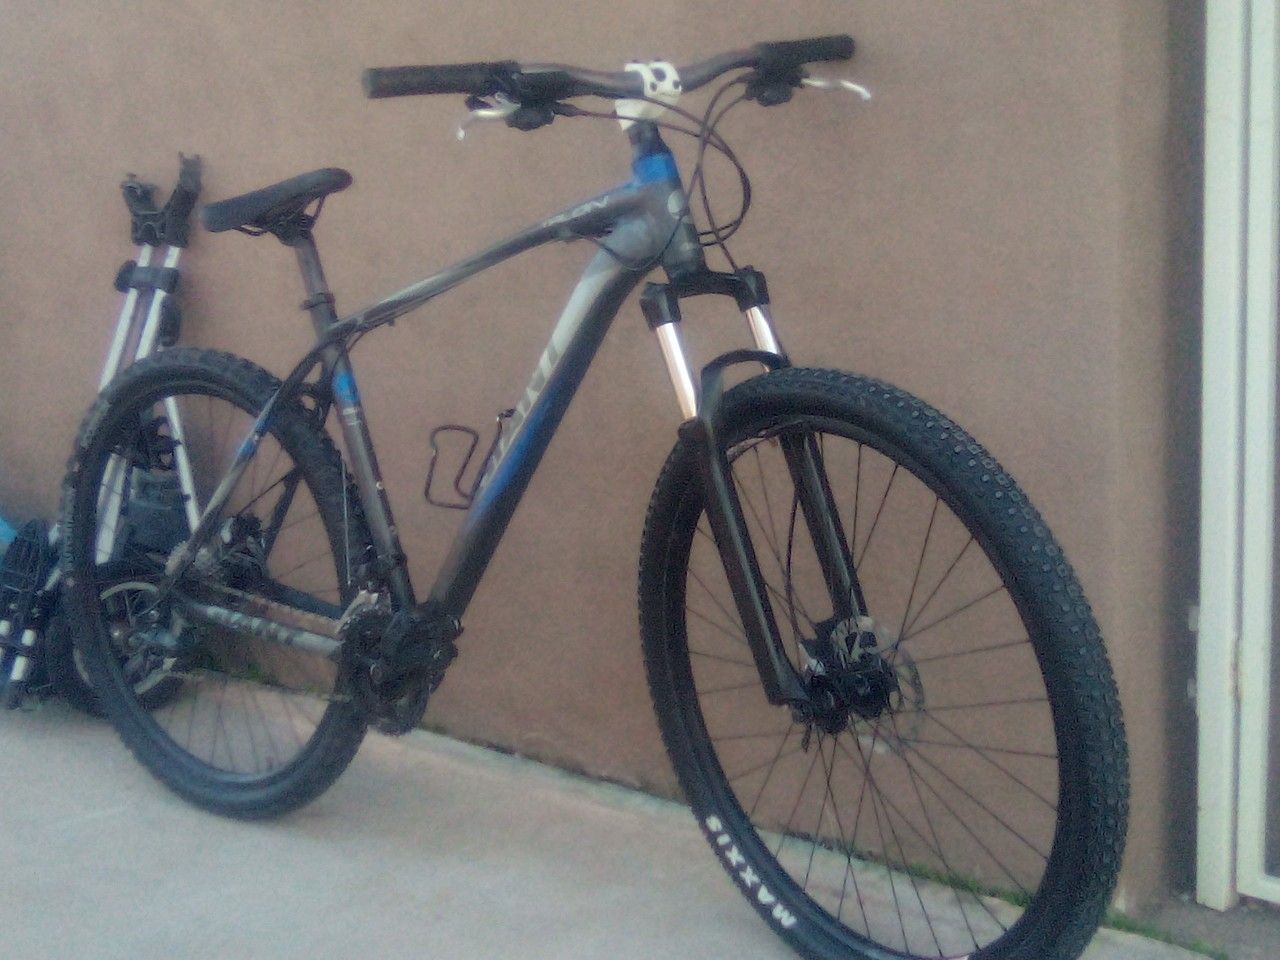 Giant talon 29 in hardtail mountain bike